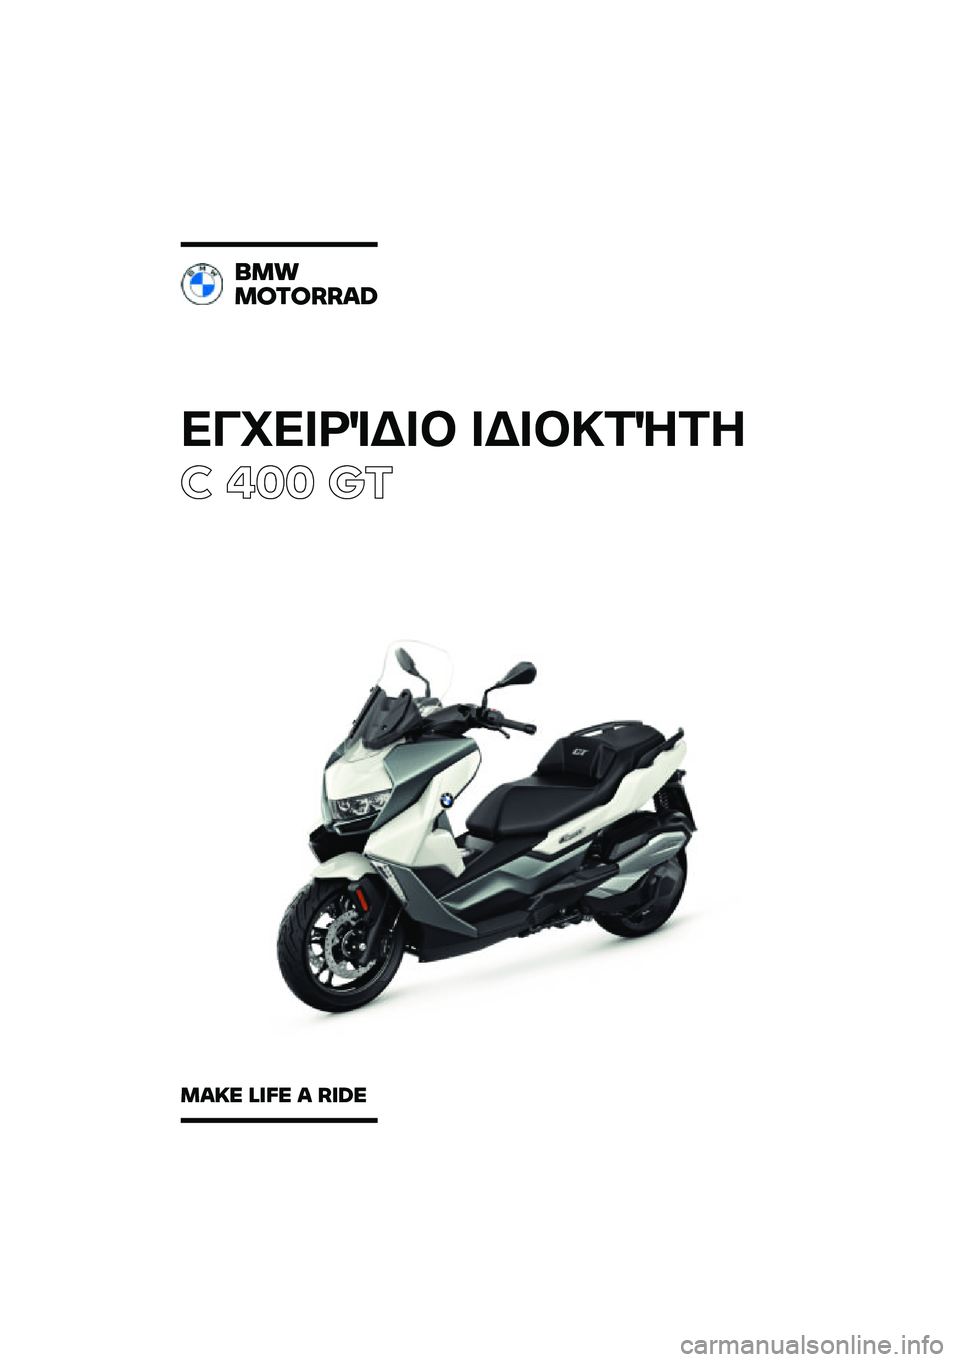 BMW MOTORRAD C 400 GT 2021  Εγχειρίδιο ιδιοκτήτη (in Greek) ��������\b��	 ��\b��	�
��\f��
� ��� ��\b
���
�������\b�	
��\b�
� �\f�
�� �\b ��
�	� 